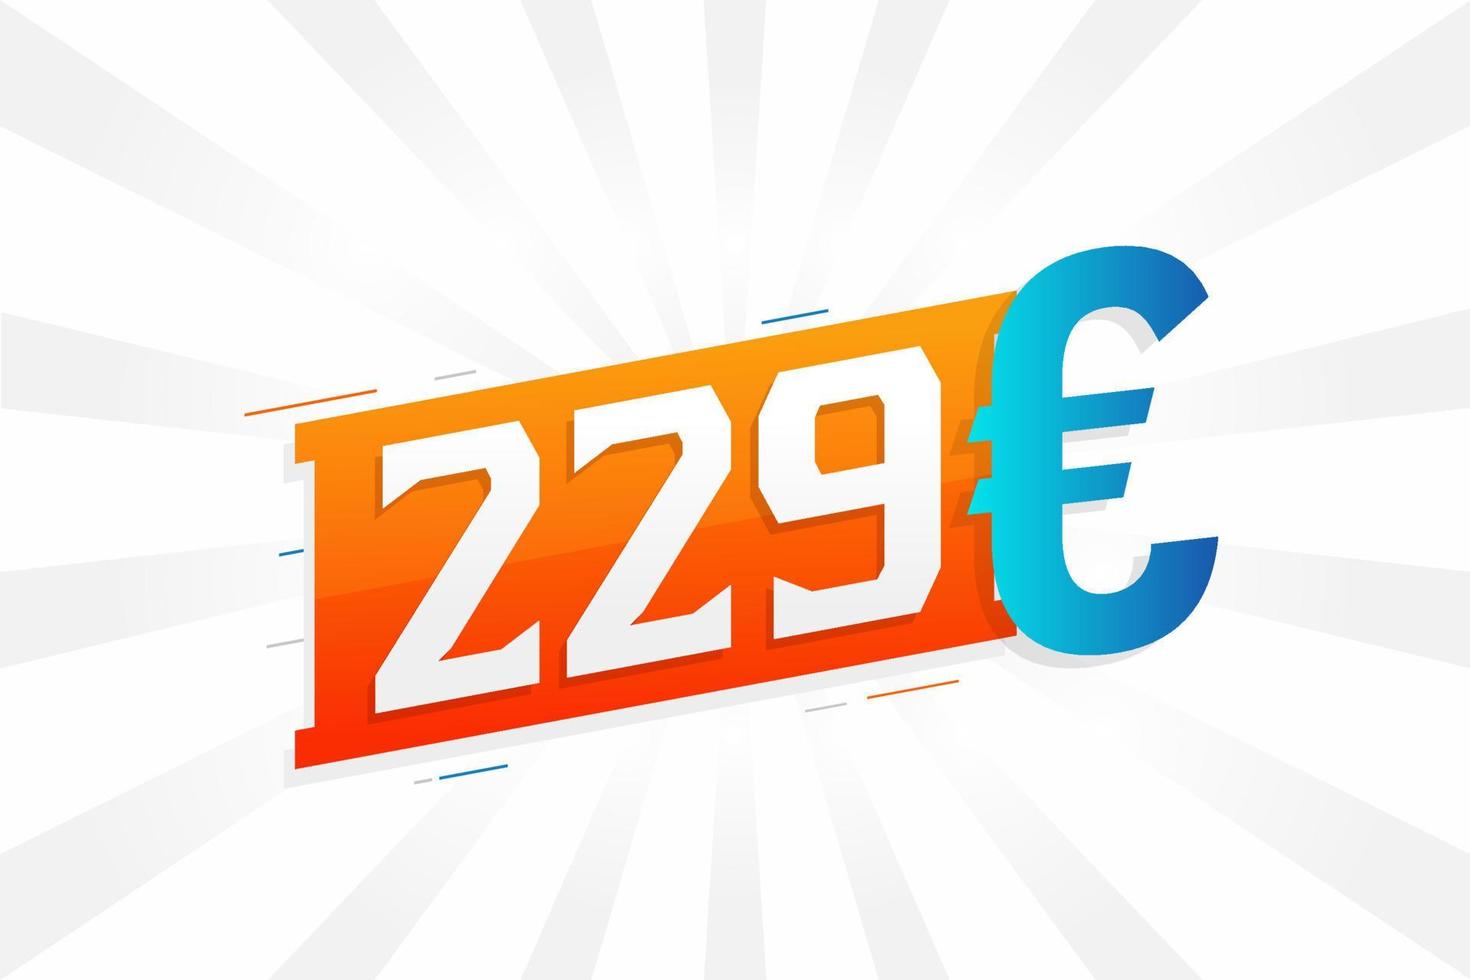 Símbolo de texto vectorial de moneda de 229 euros. 229 euro vector de stock de dinero de la unión europea